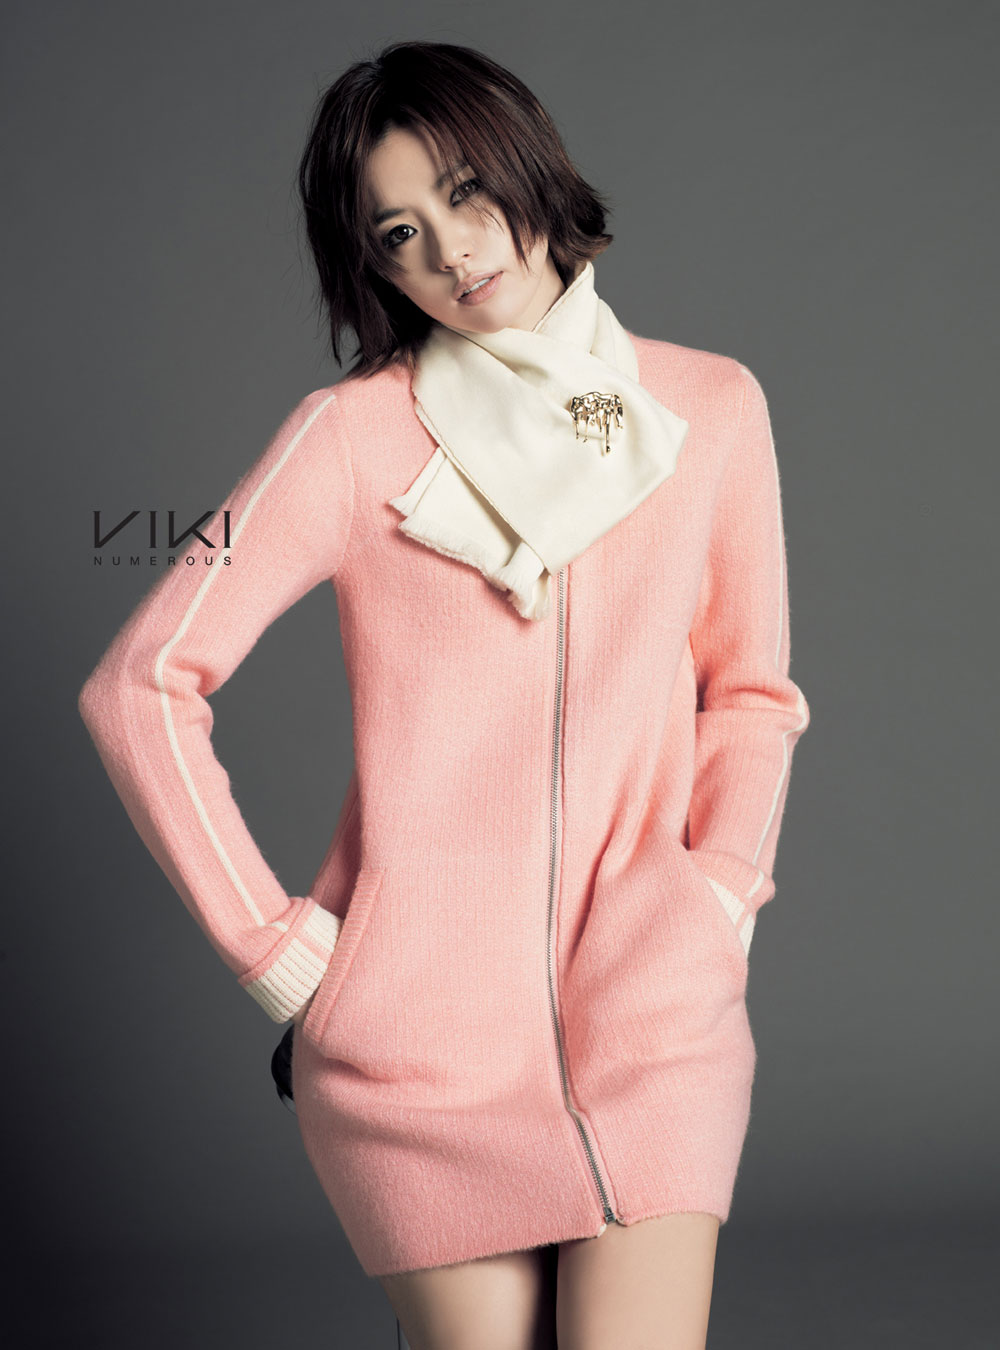 Han Hyo Joo VIKI Numerous fashion brand